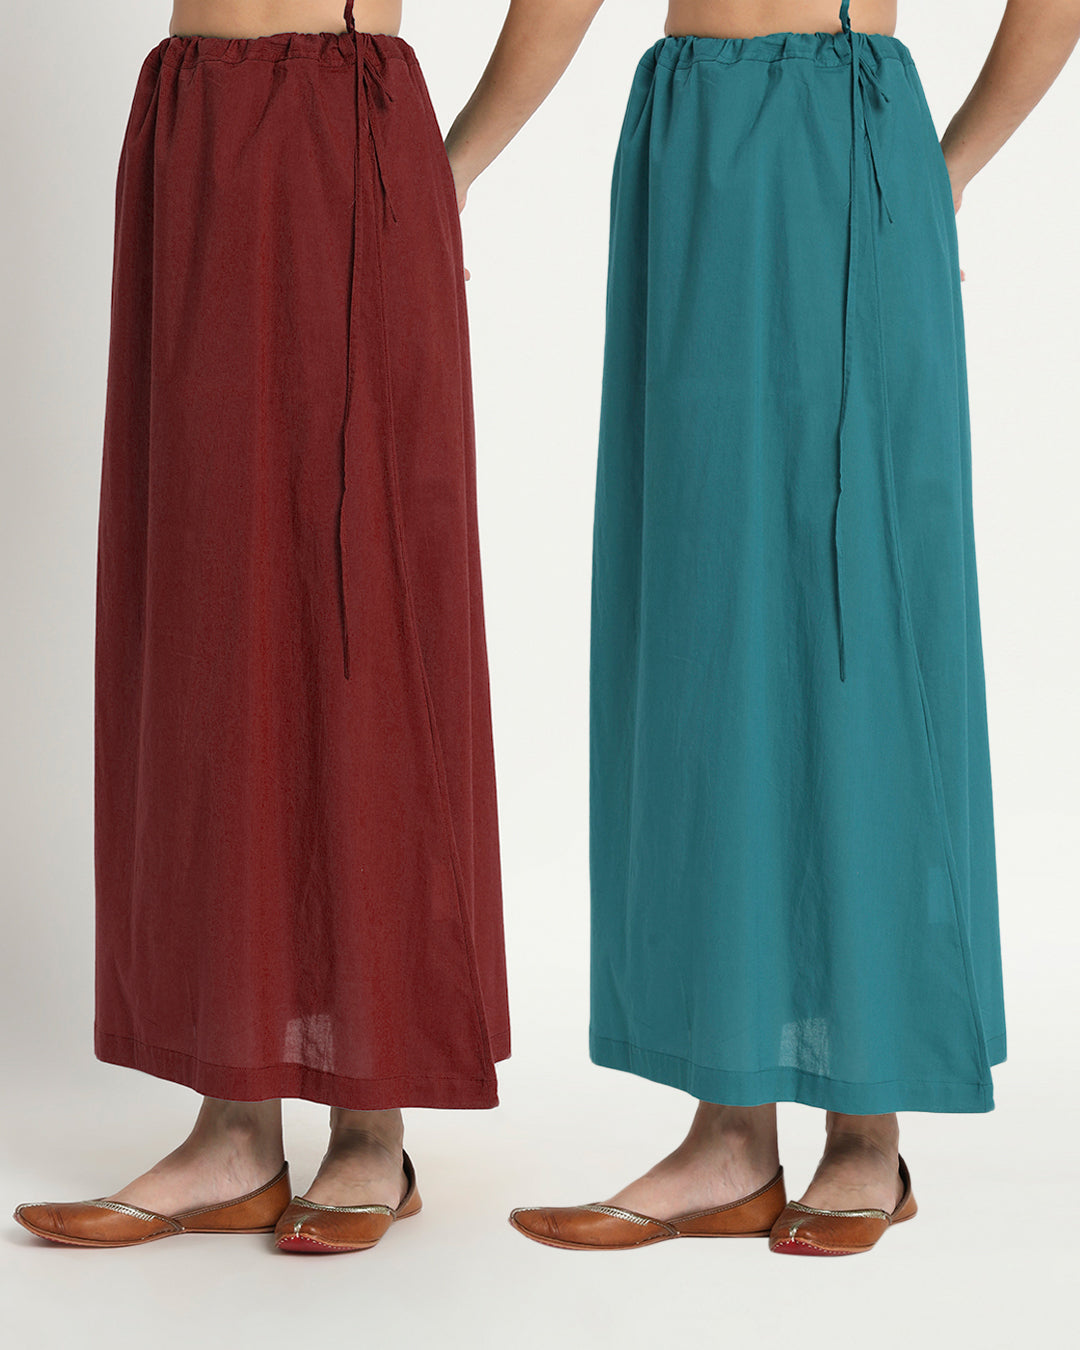 Combo: Russet Red & Green Gleam Peekaboo Petticoat- Set of 2